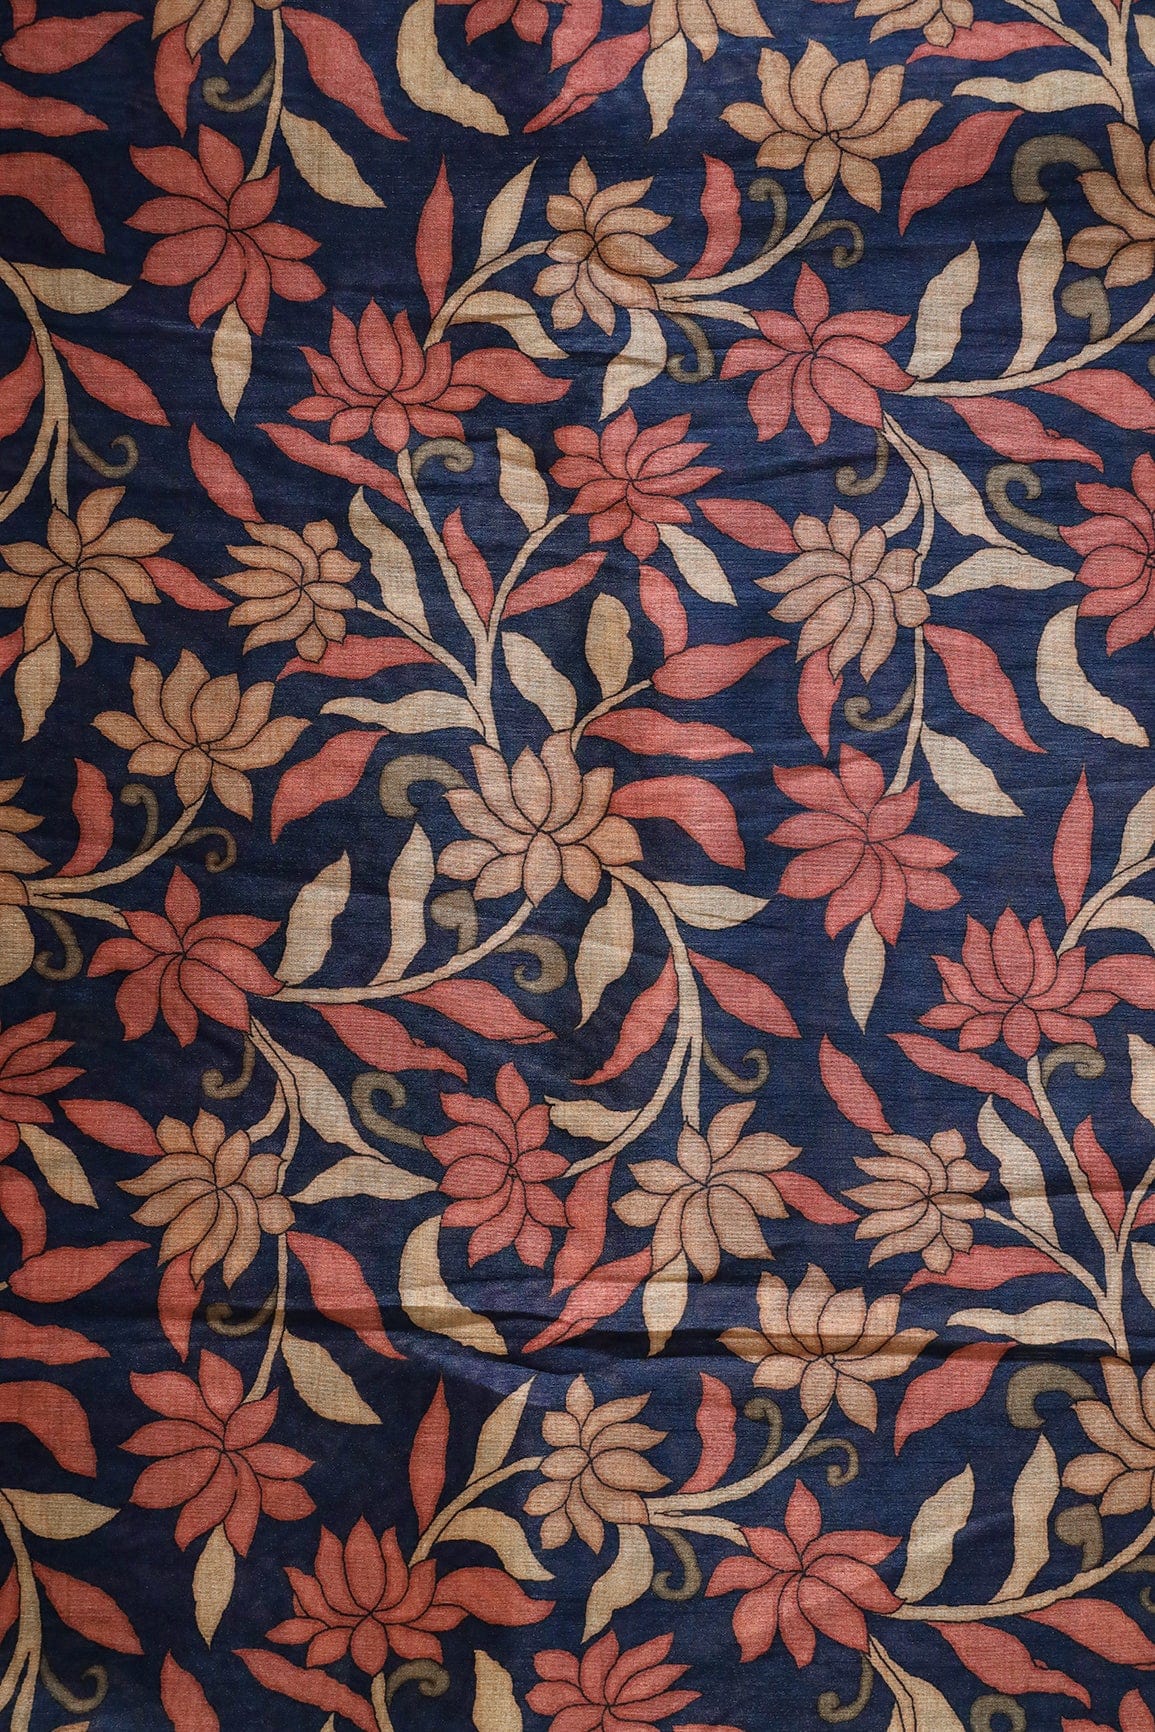 doeraa Prints Navy Blue Floral Pattern Digital Print On Mulberry Silk Fabric